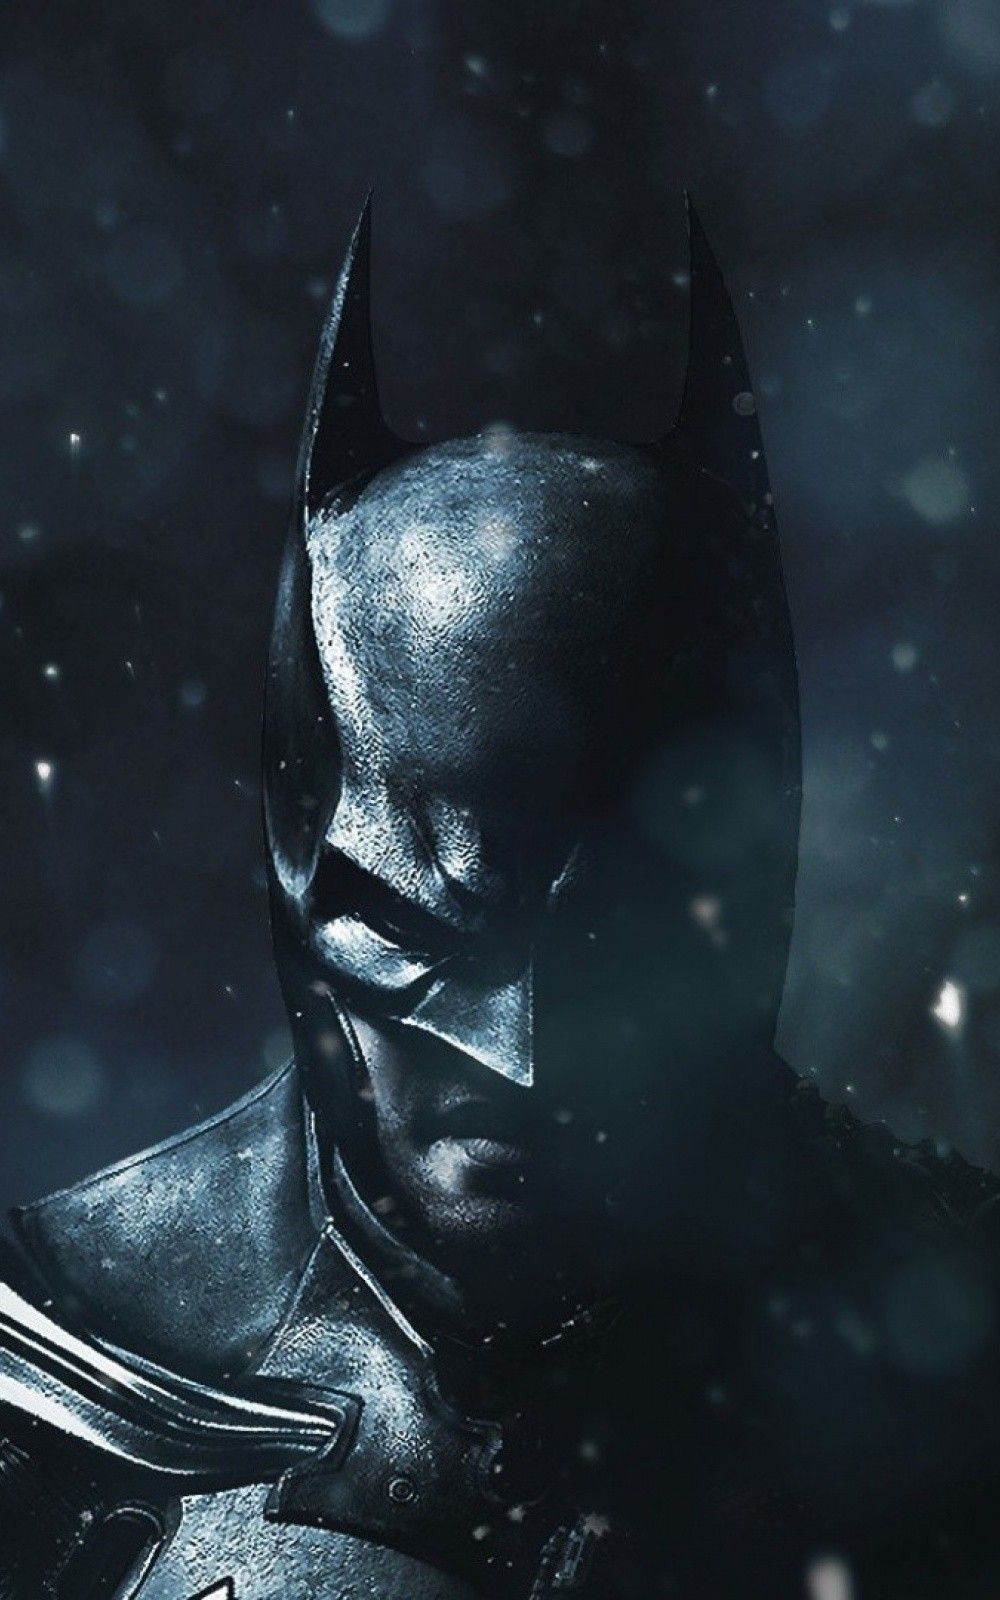 Batman in the rain (phone wallpaper) : r/ComicWalls